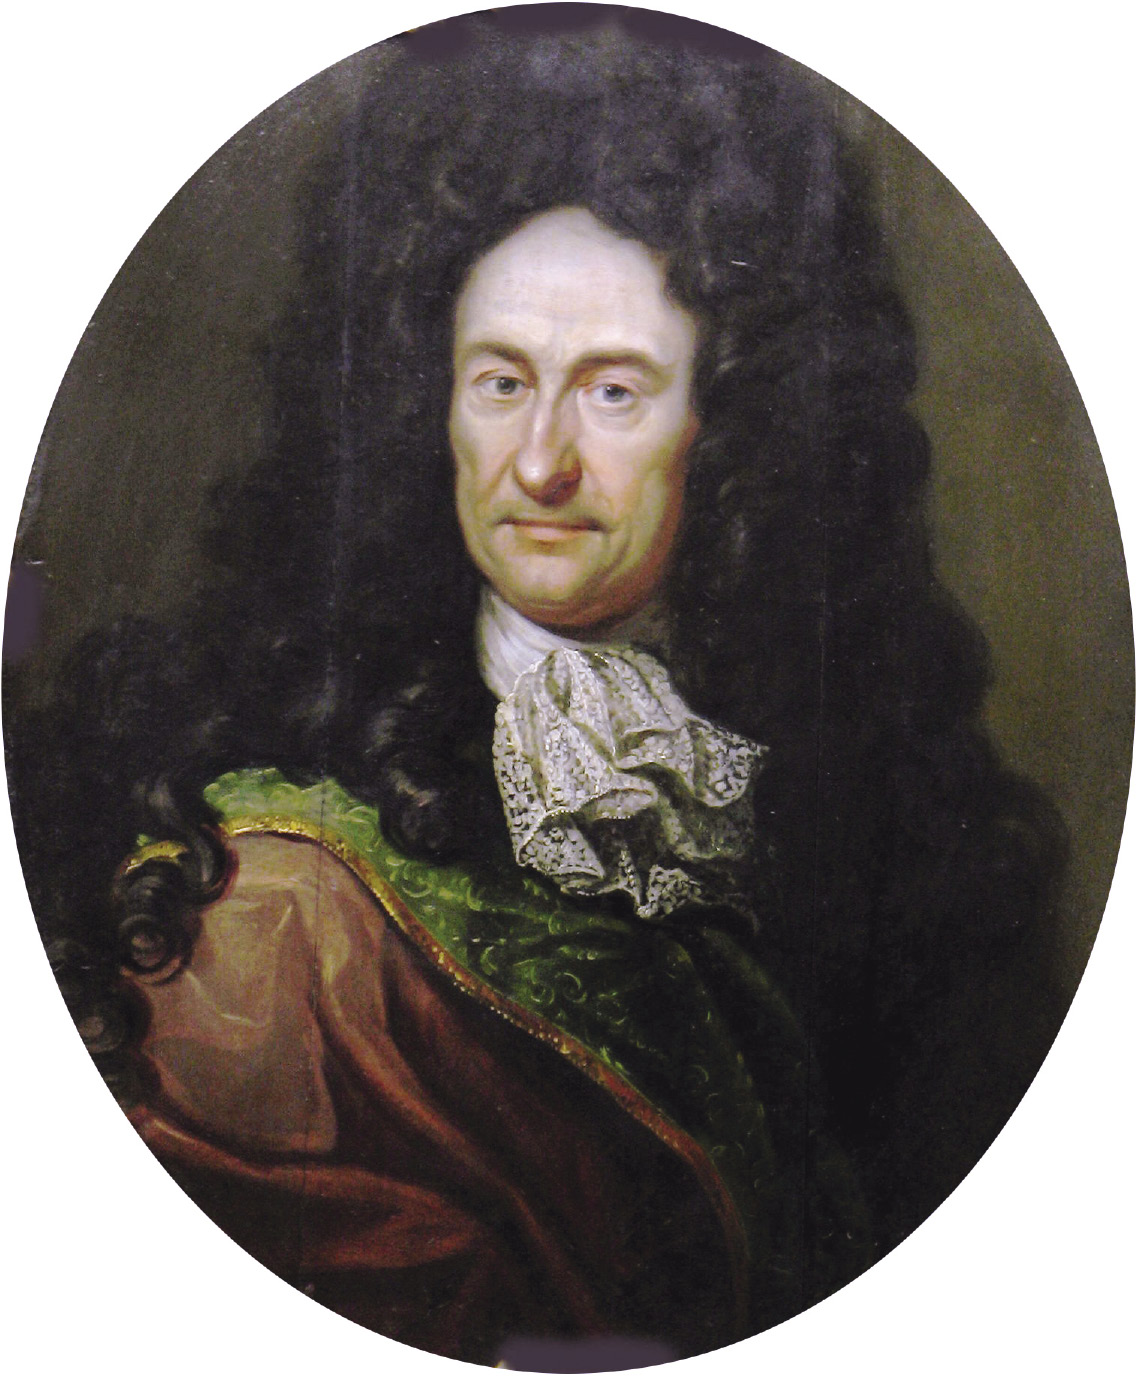 v1-2-Leibniz_Gottfried_Wilhelm__c1700.jpg